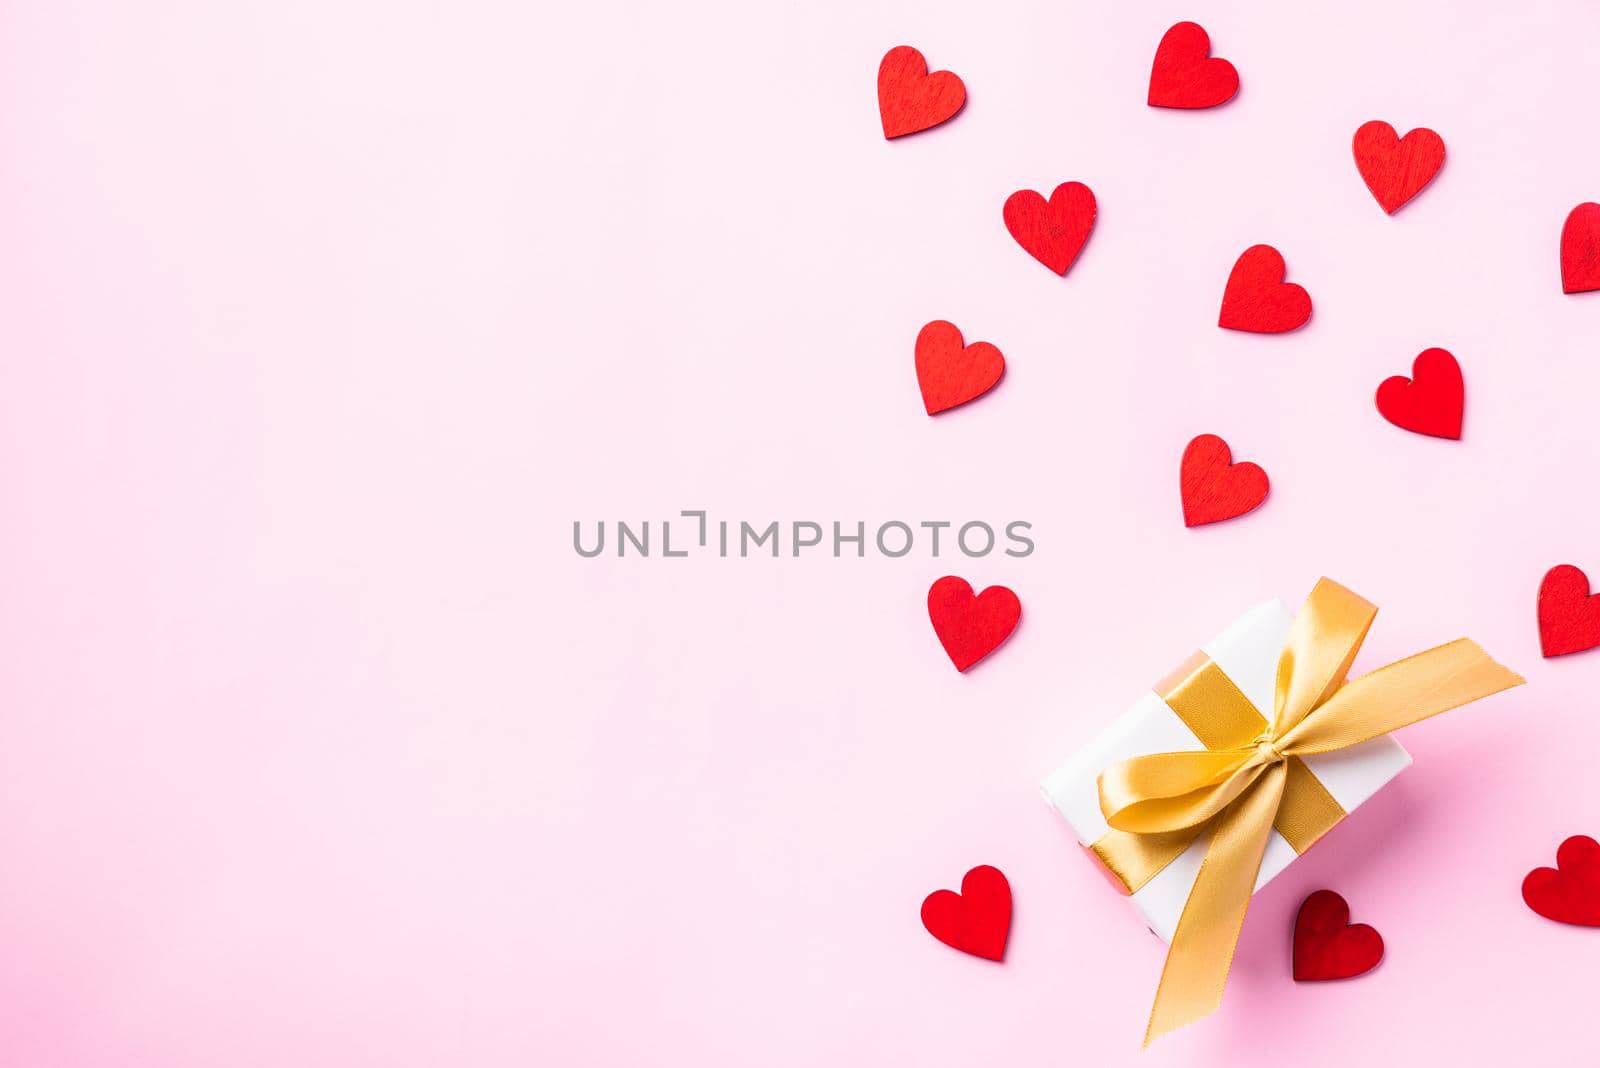 Happy Valentines' day background by Sorapop